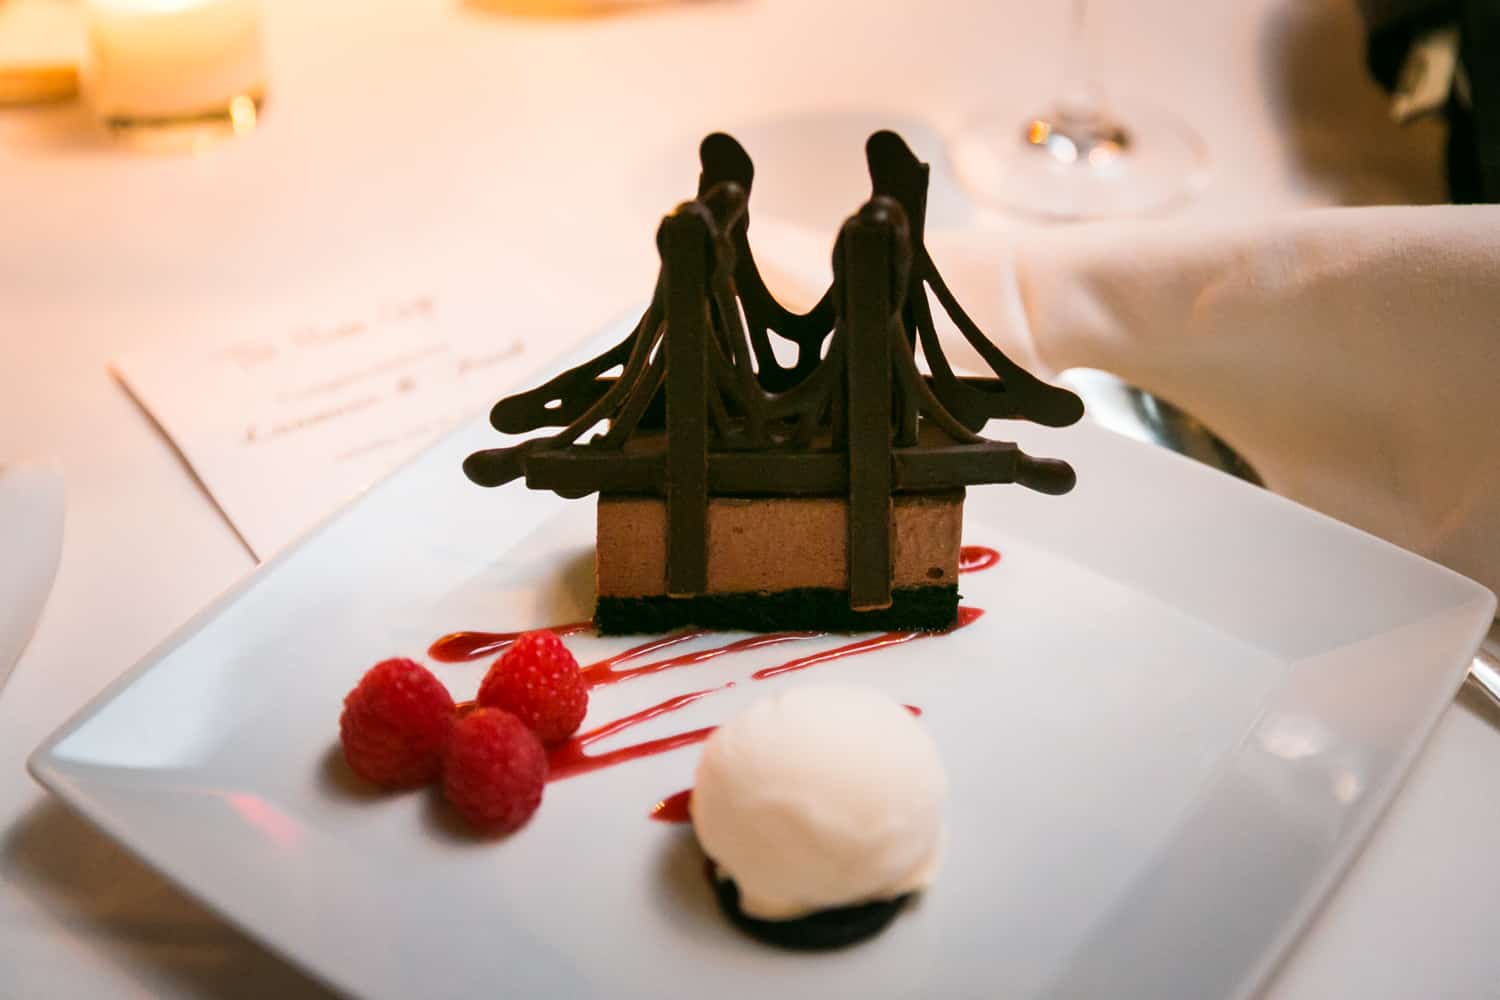 Chocolate dessert in the shape of the Brooklyn Bridge